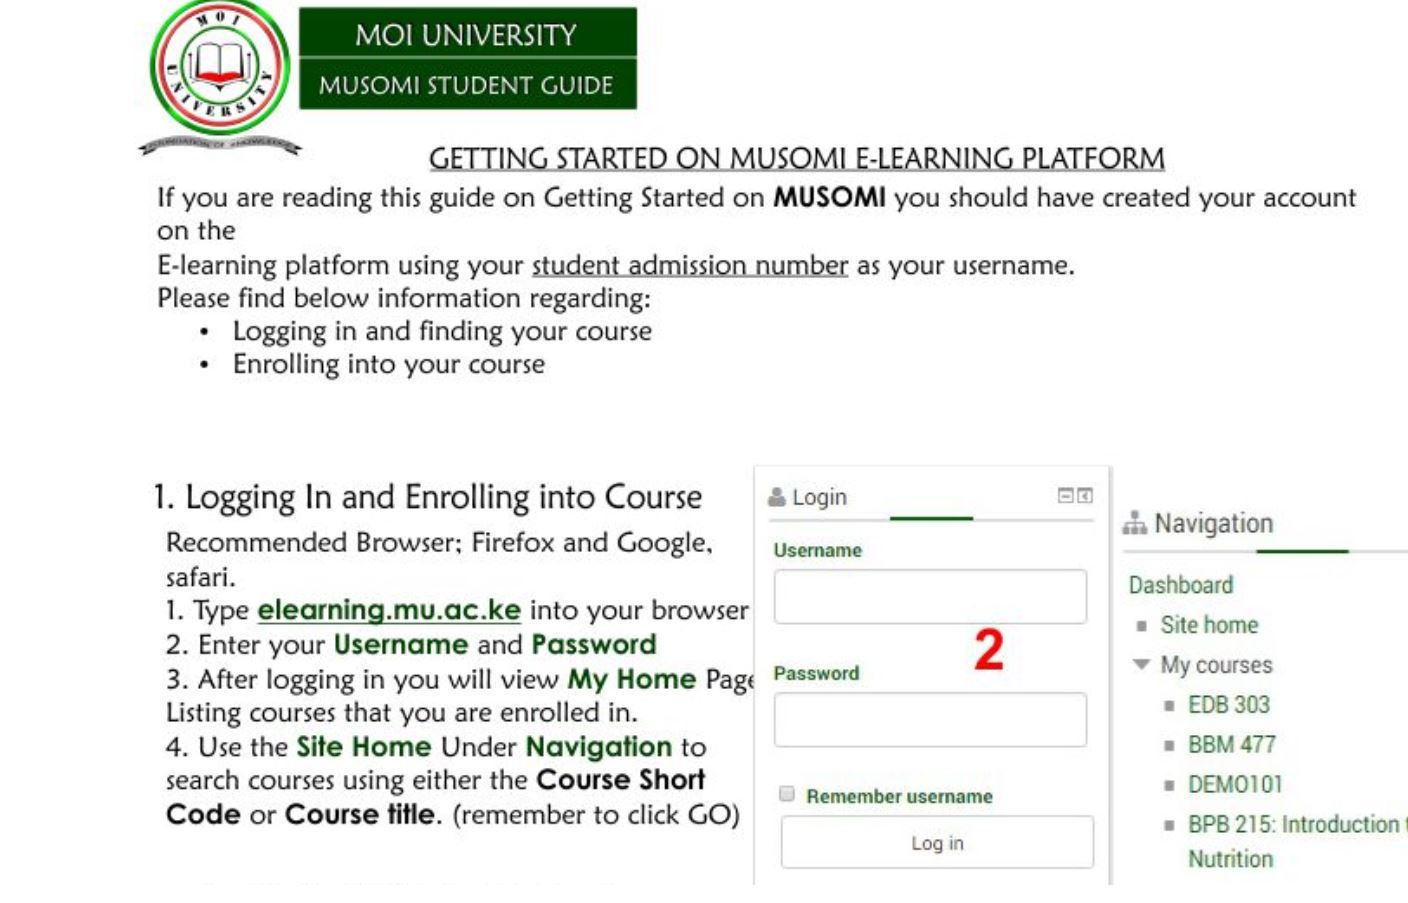 Moi university e-learning portal: Musomi Registration Guide